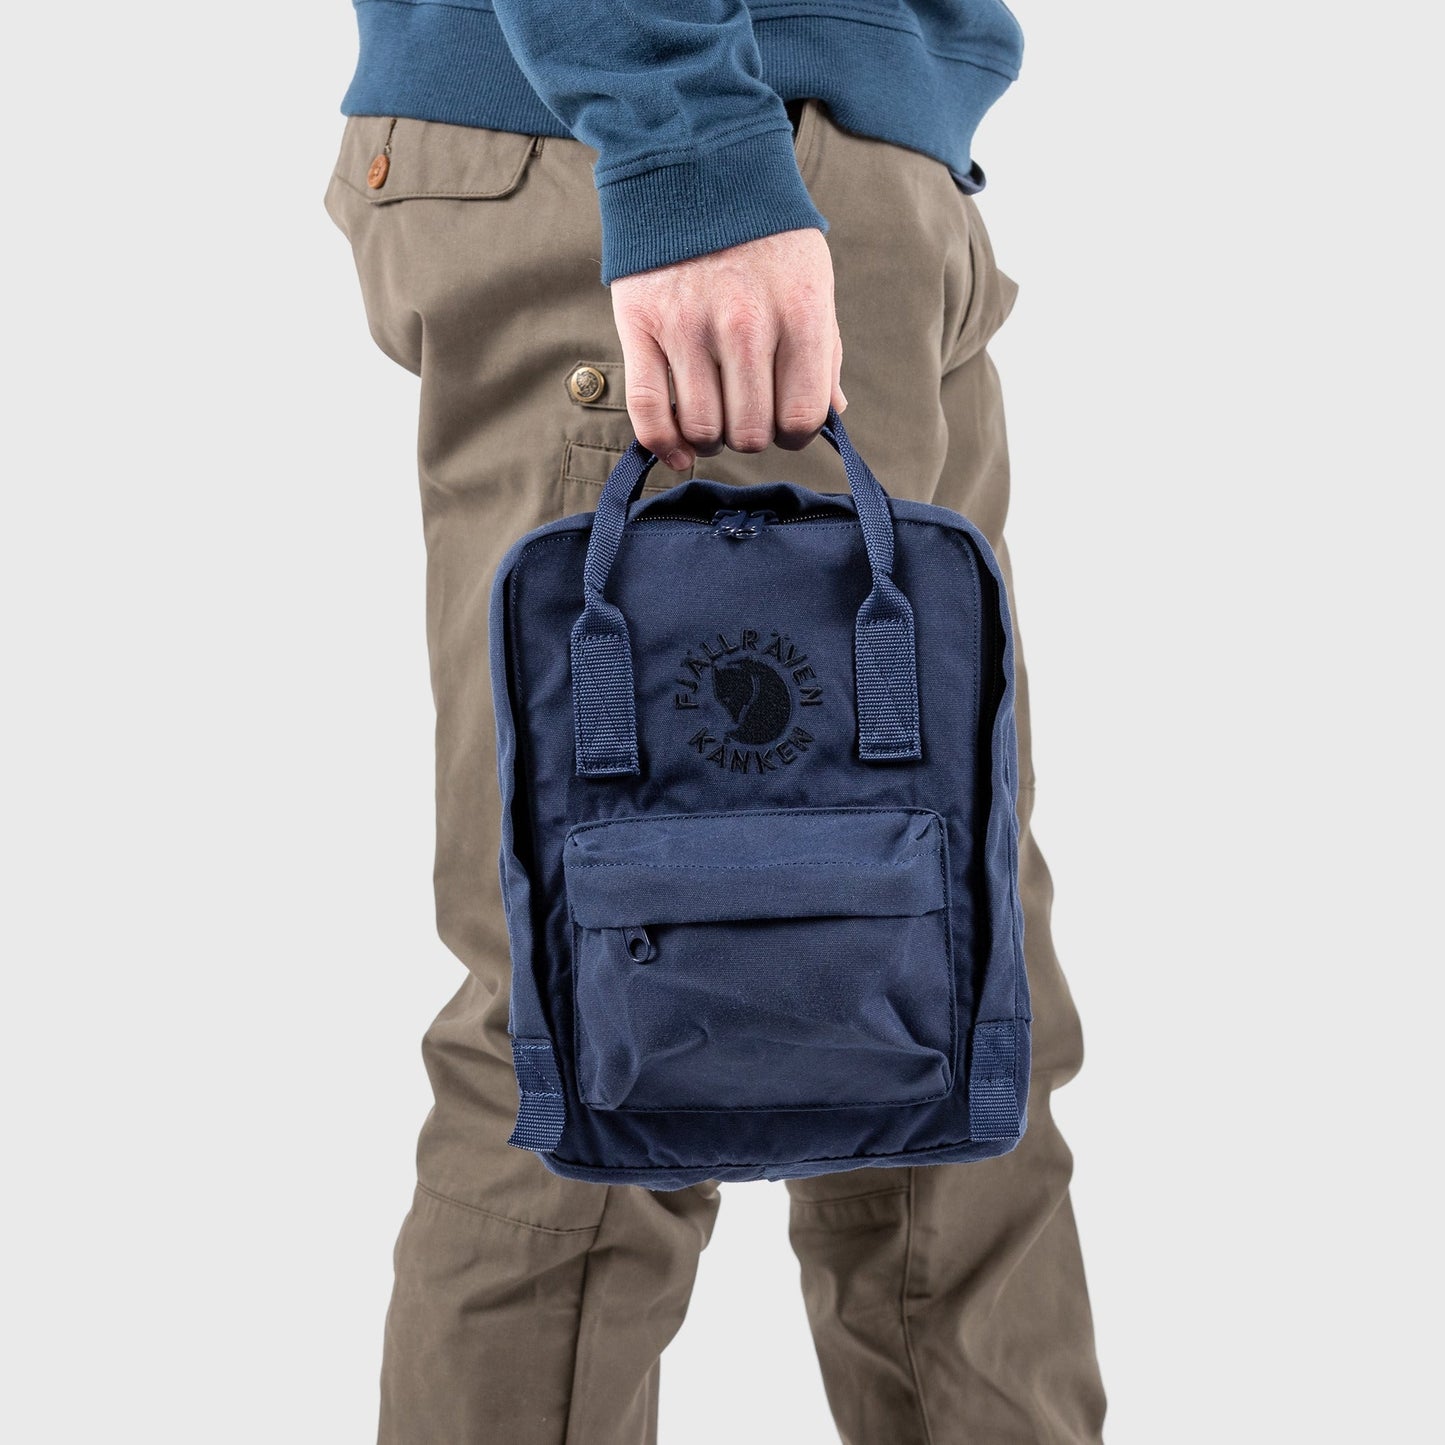 FJÄLLRÄVEN - 瑞典北極狐【狐狸袋】RE-KÅNKEN Mini 7L 迷你背囊 School bag outdoor backpack 23549-633 DARK OLIVE